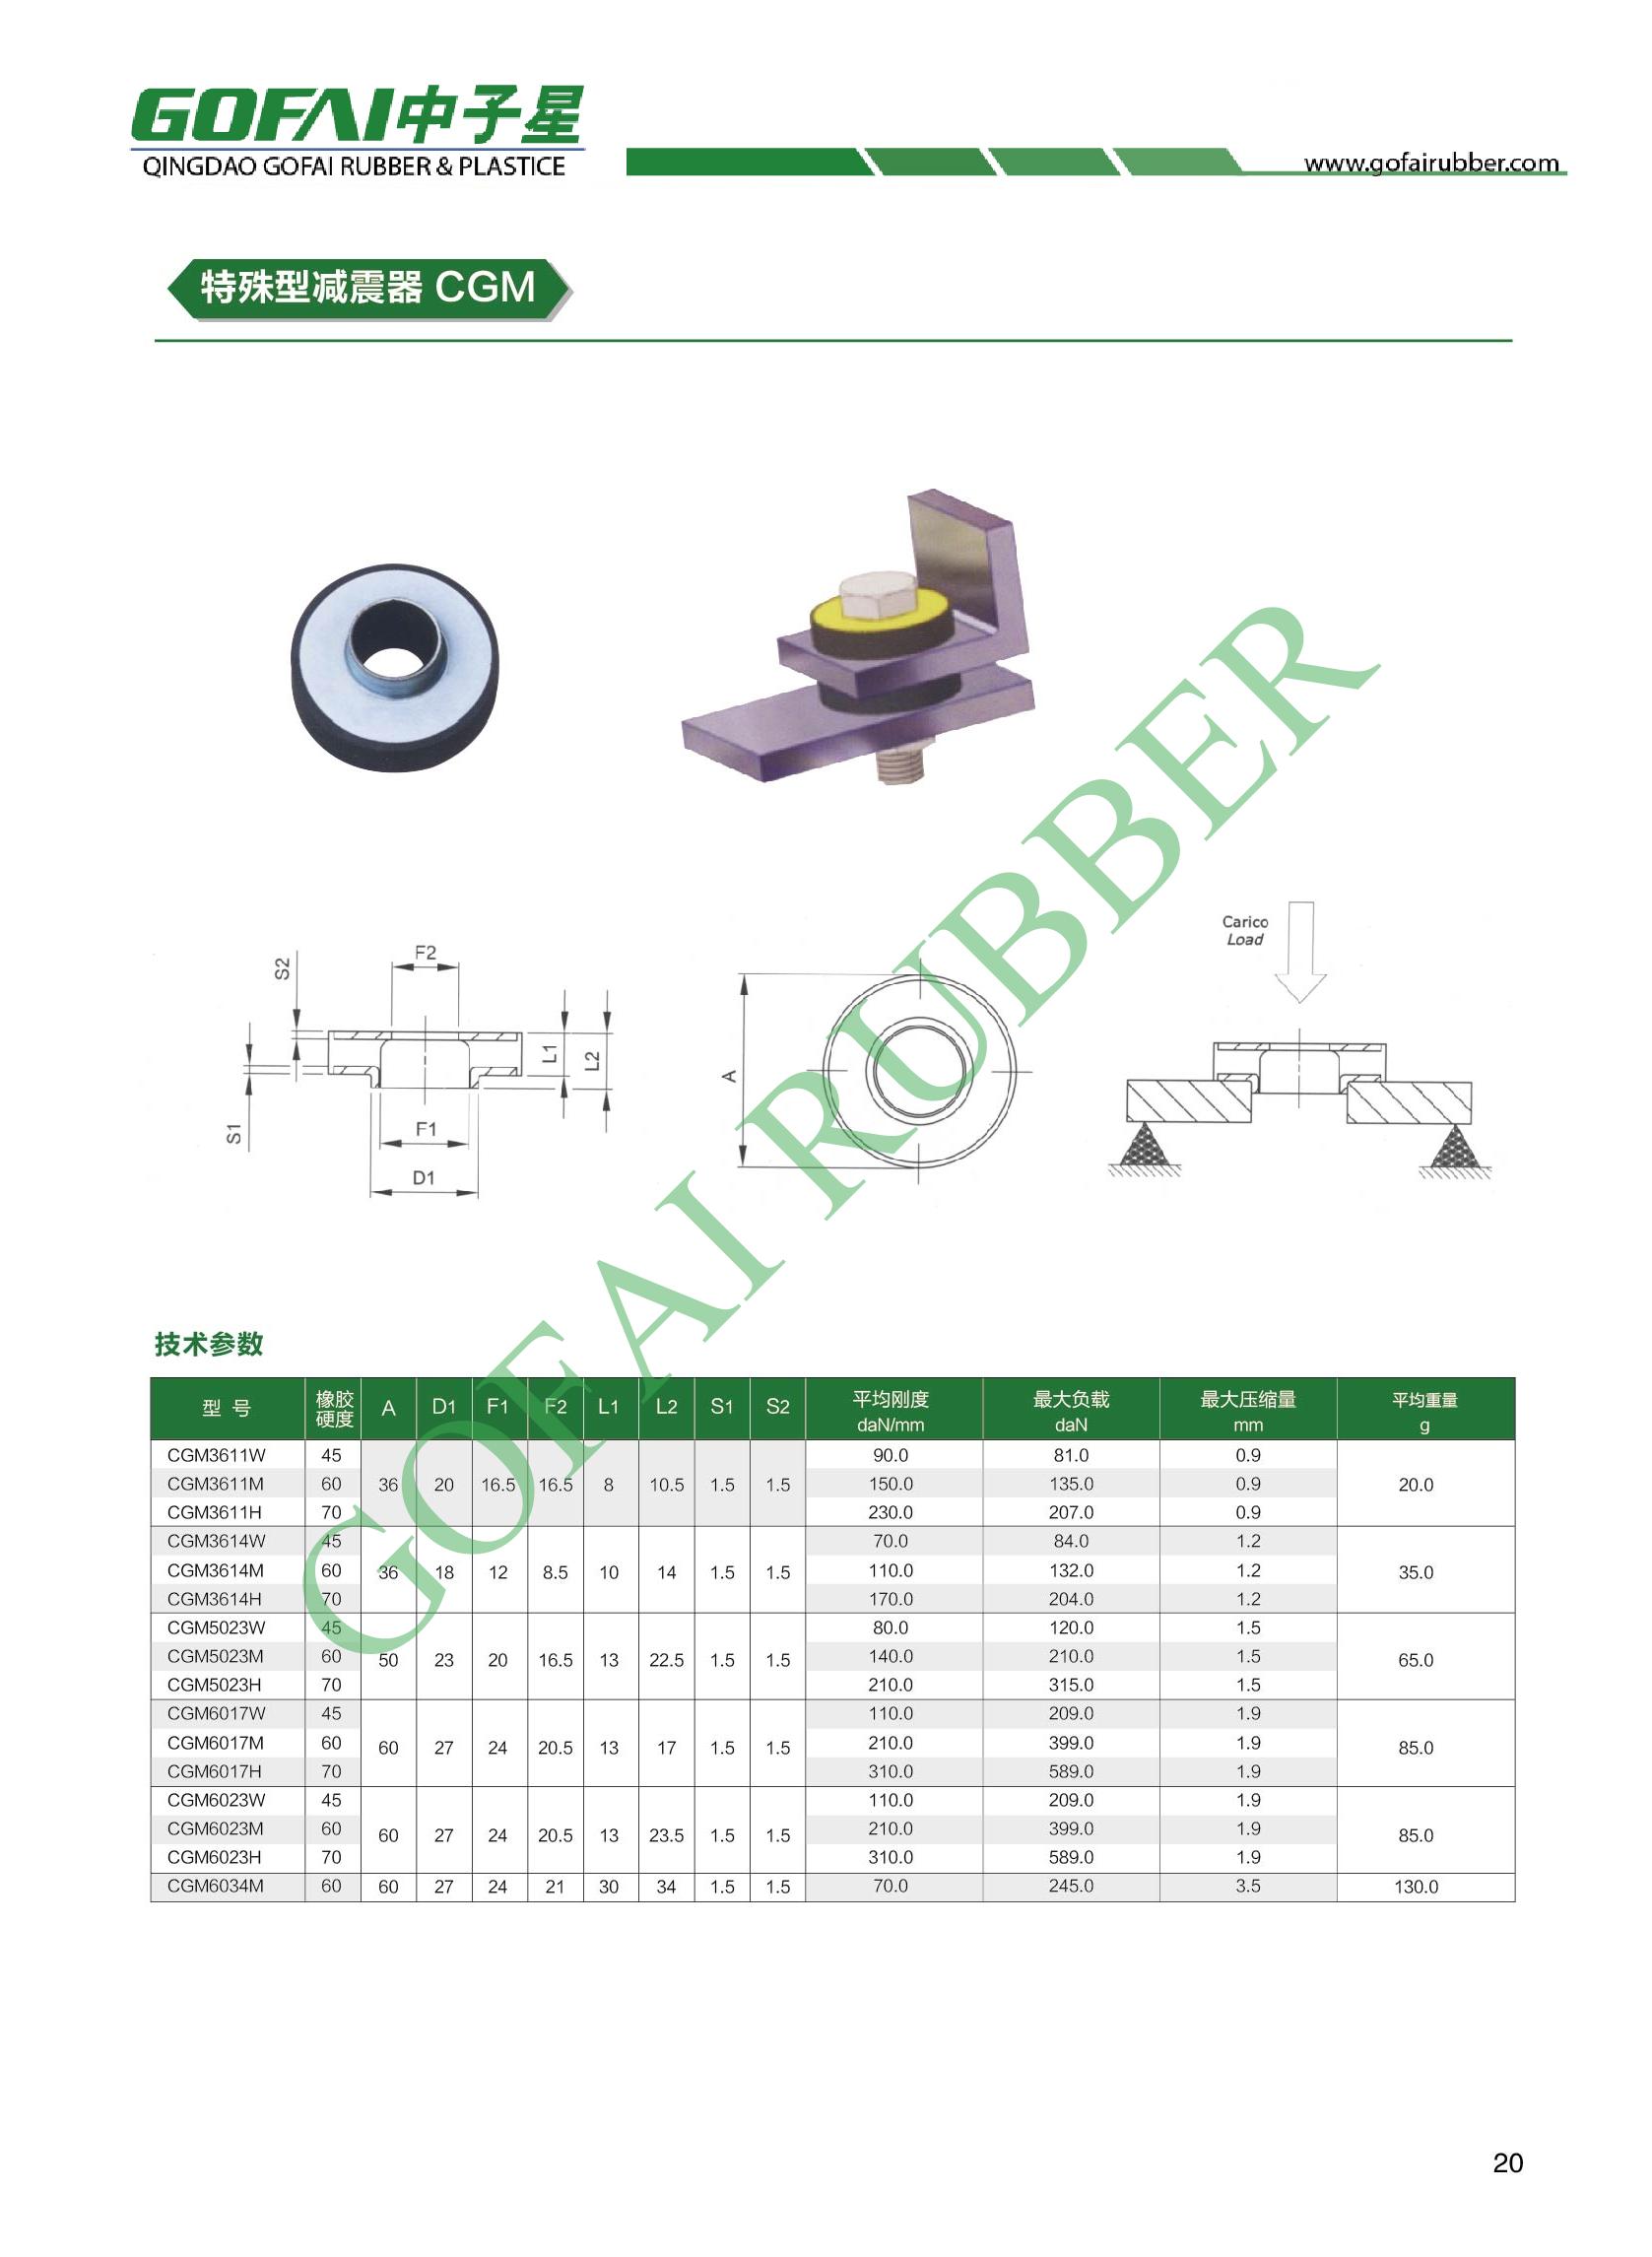 GOFAI catalog for rubber anti-vibration mounts_18.jpg